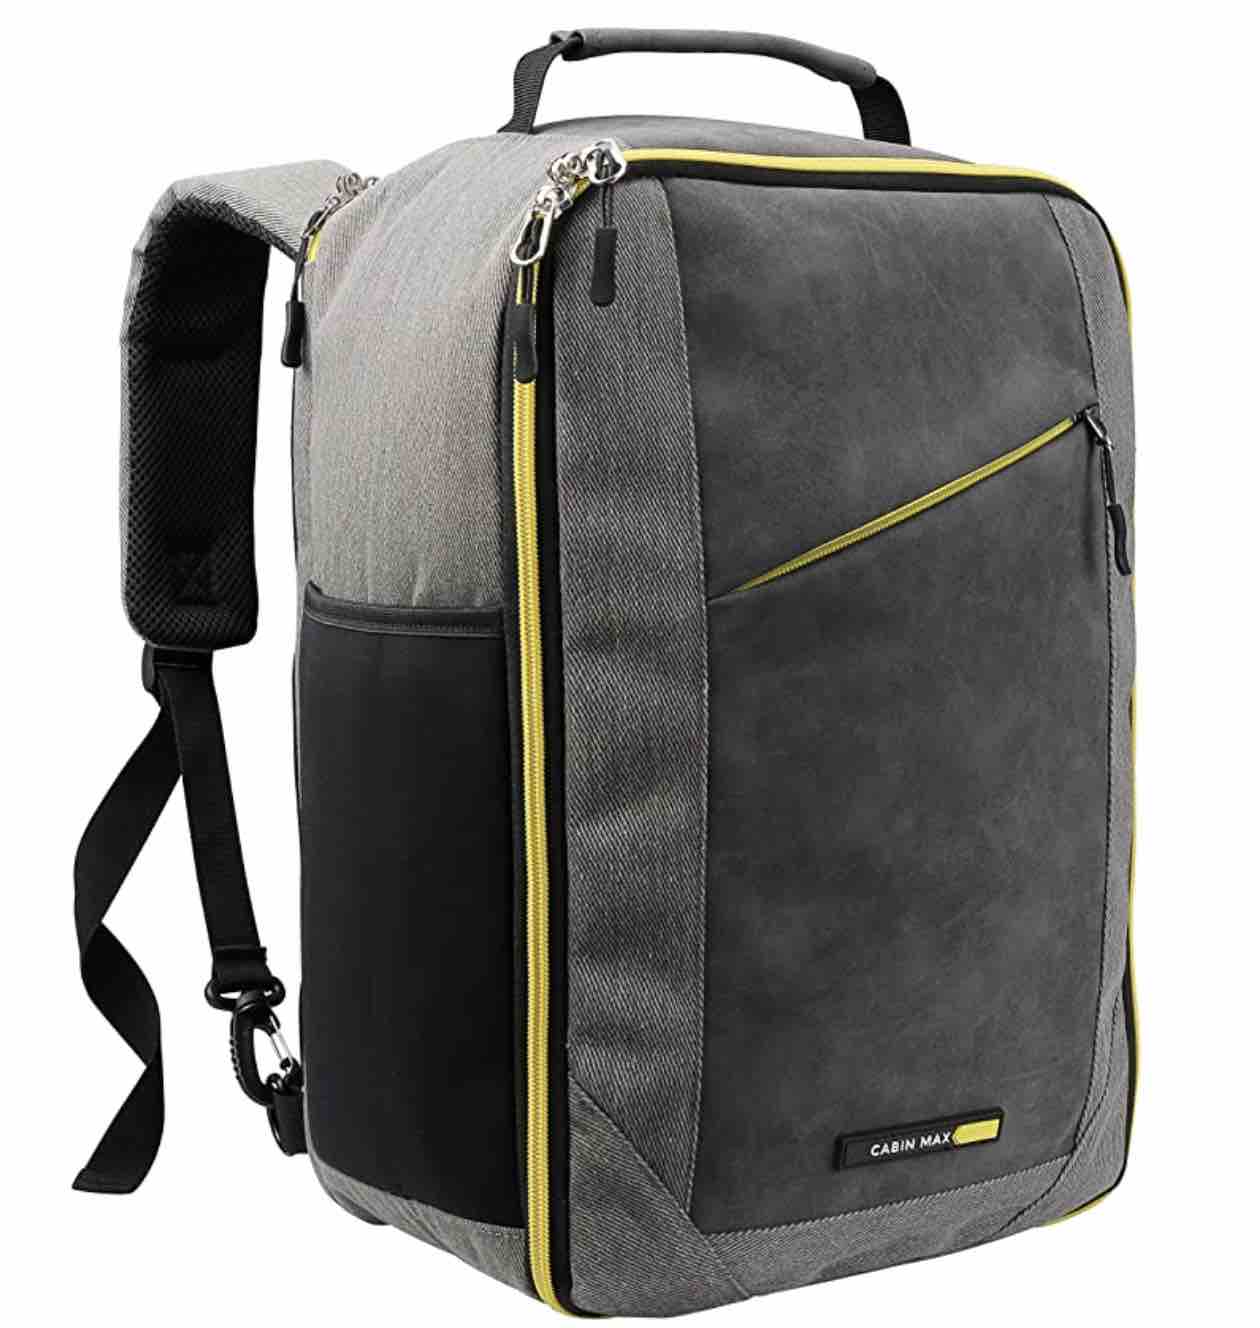 Cabin Max Manhattan Travel Bag | Ryanair Cabin Bags 40x20x25 | Underseat Stowaway Hand Luggage | Shoulder Bag | Weekend Backpack 20L